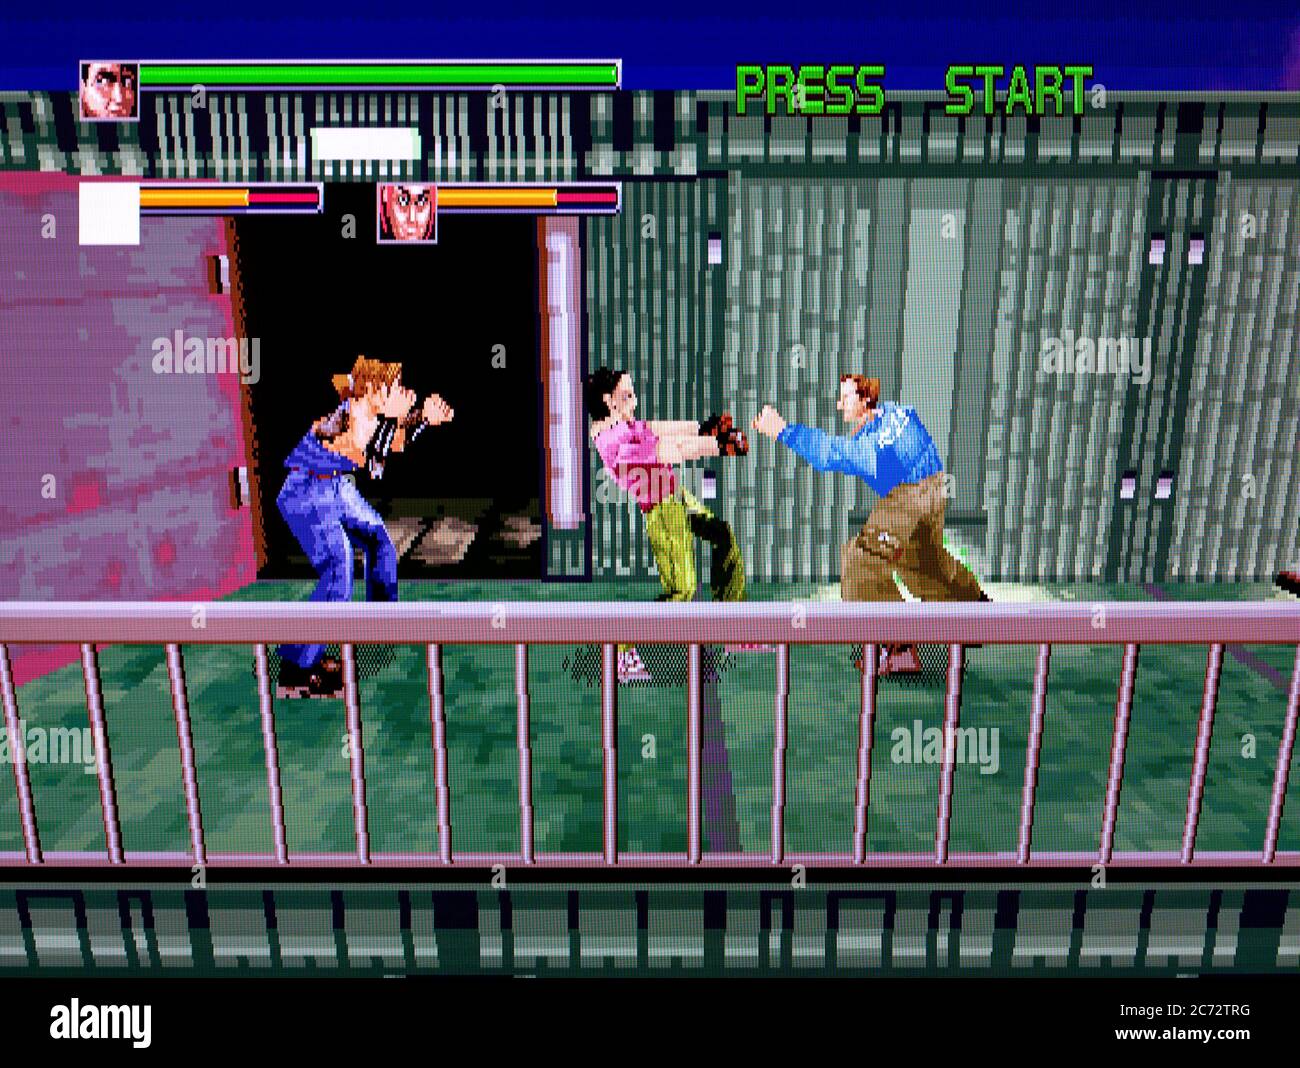 Die Hard Arcade - Sega Saturn Videogame - Editorial use only Stock Photo